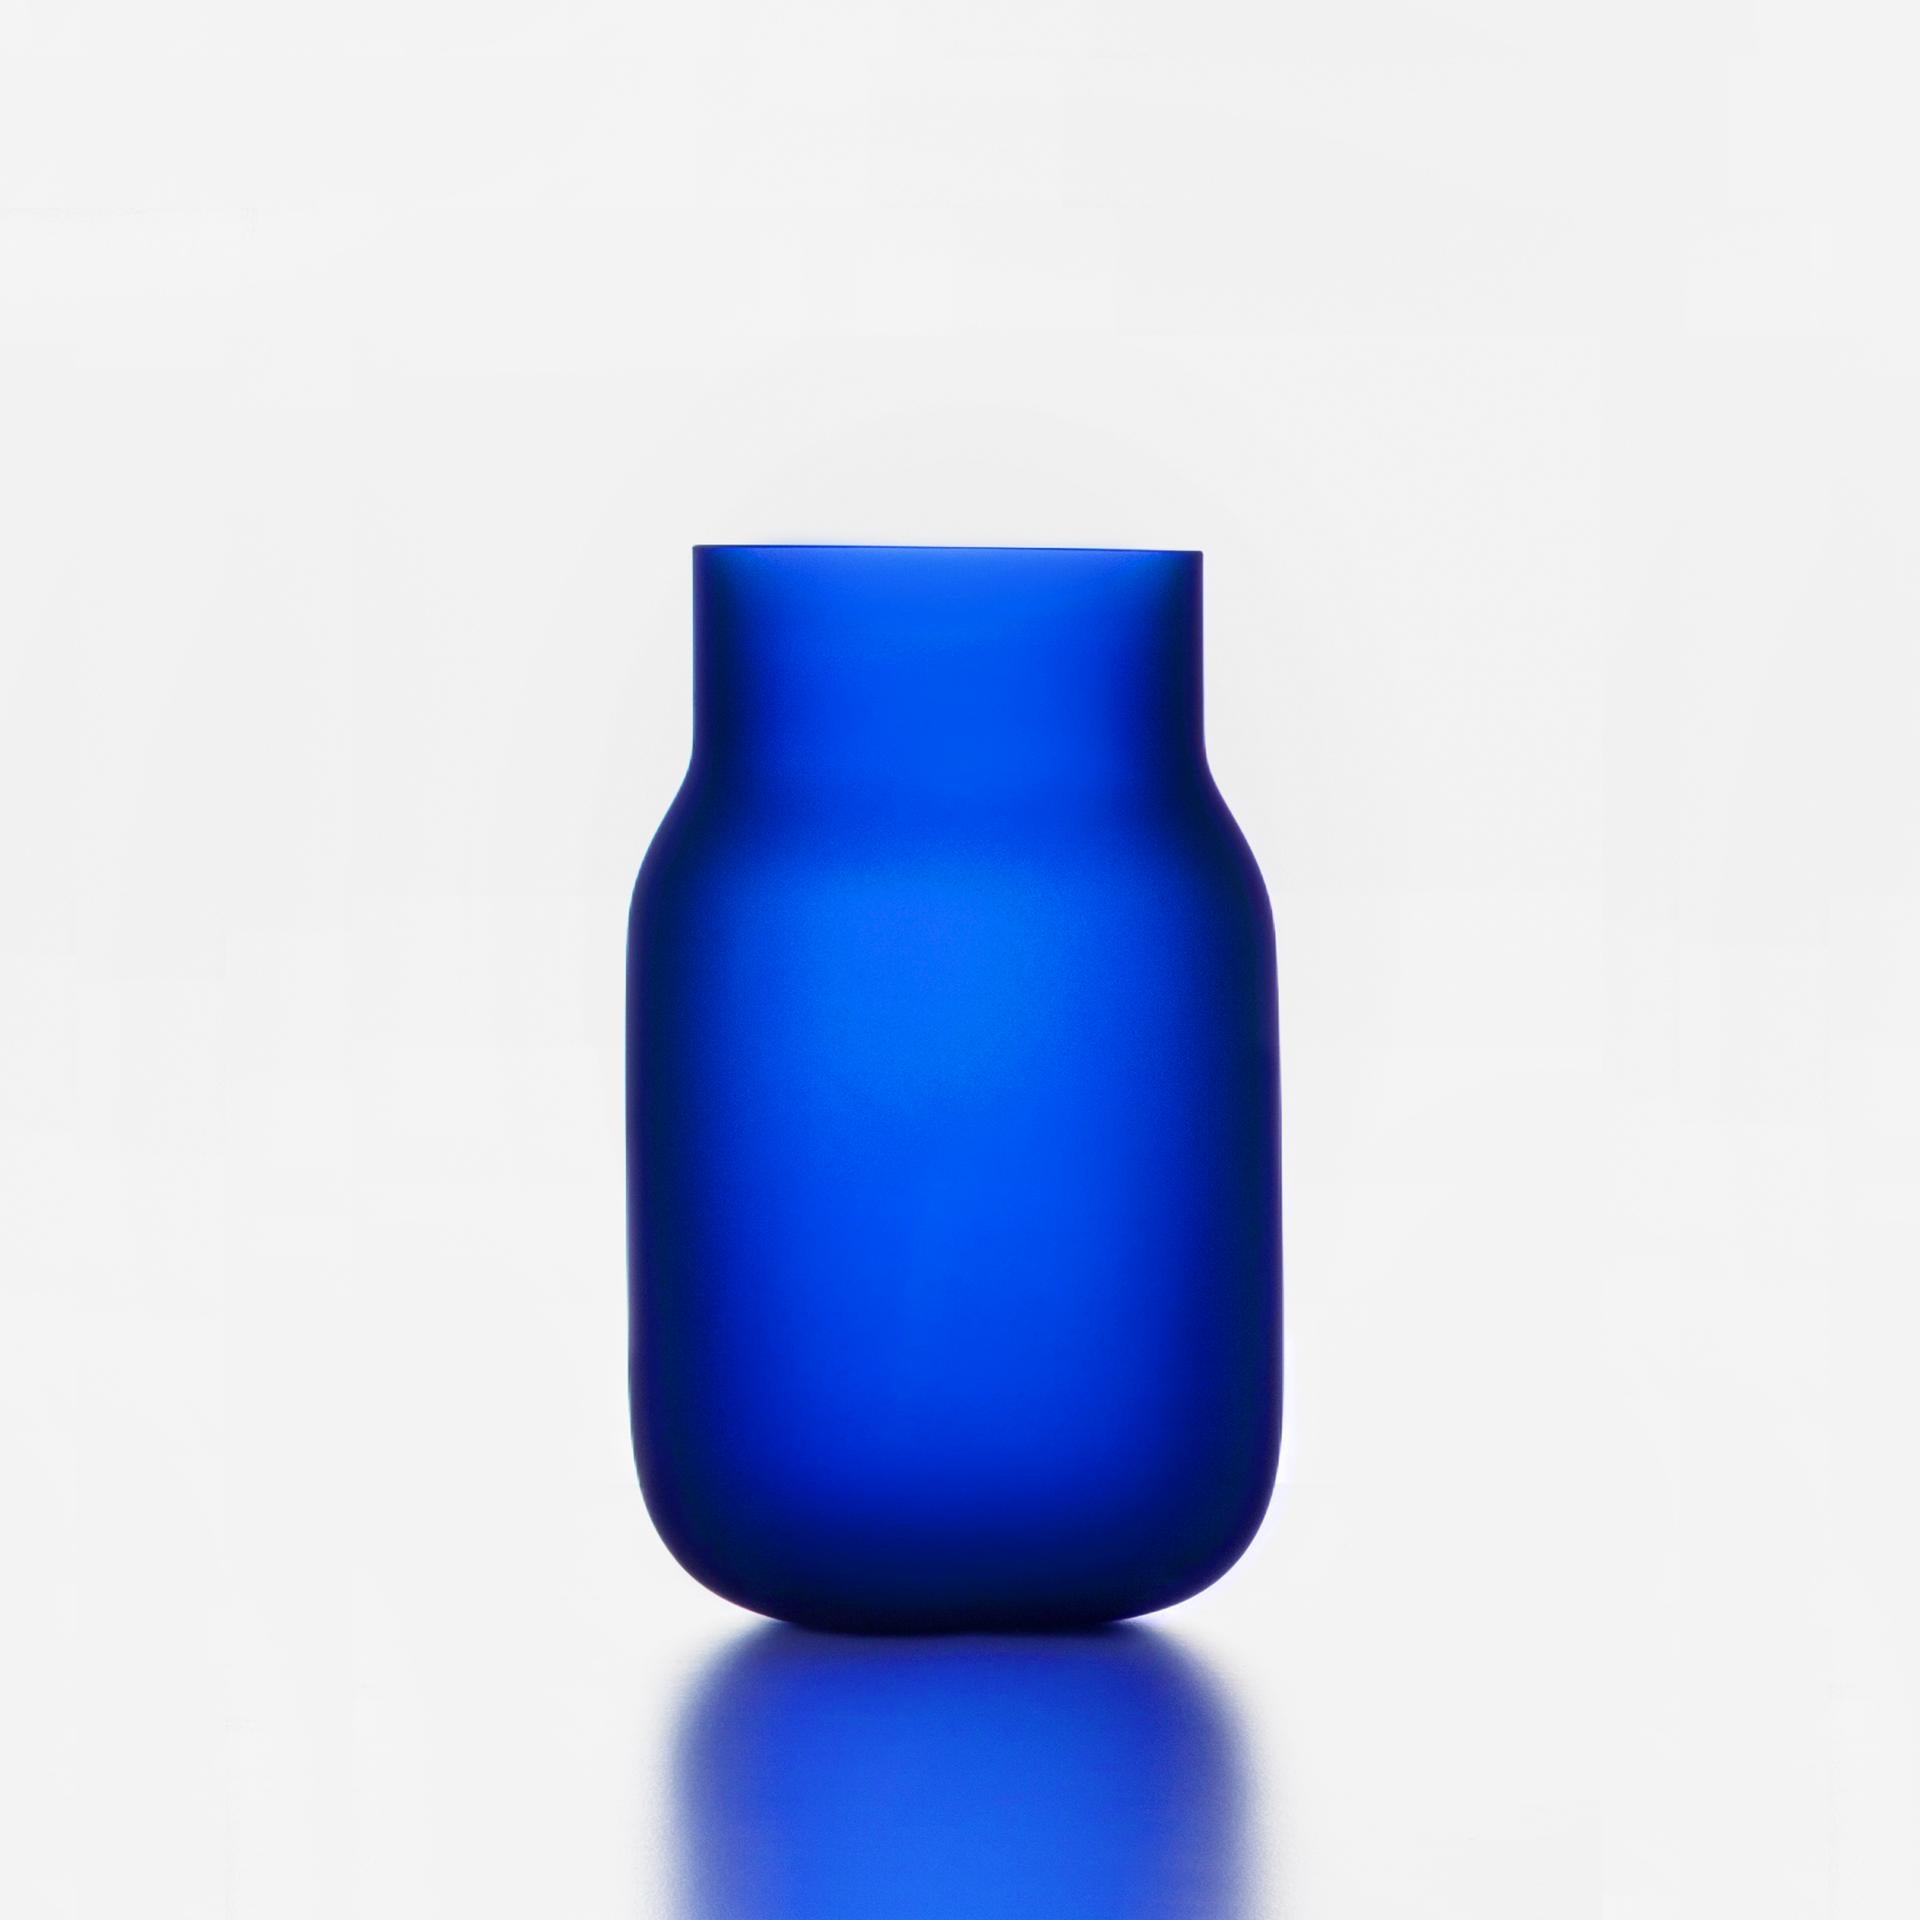 Medium Blue Bandaska Matte vase by Dechem Studio.
Dimensions: D 15 x H 25 cm.
Materials: glass.
Available in 4 sizes: D 15 x H 25/ D 18 x H 24/ D 9 x W 31/ D 22 x H 33 cm.
Available in black, uranium yellow, dark blue.

hand blown into